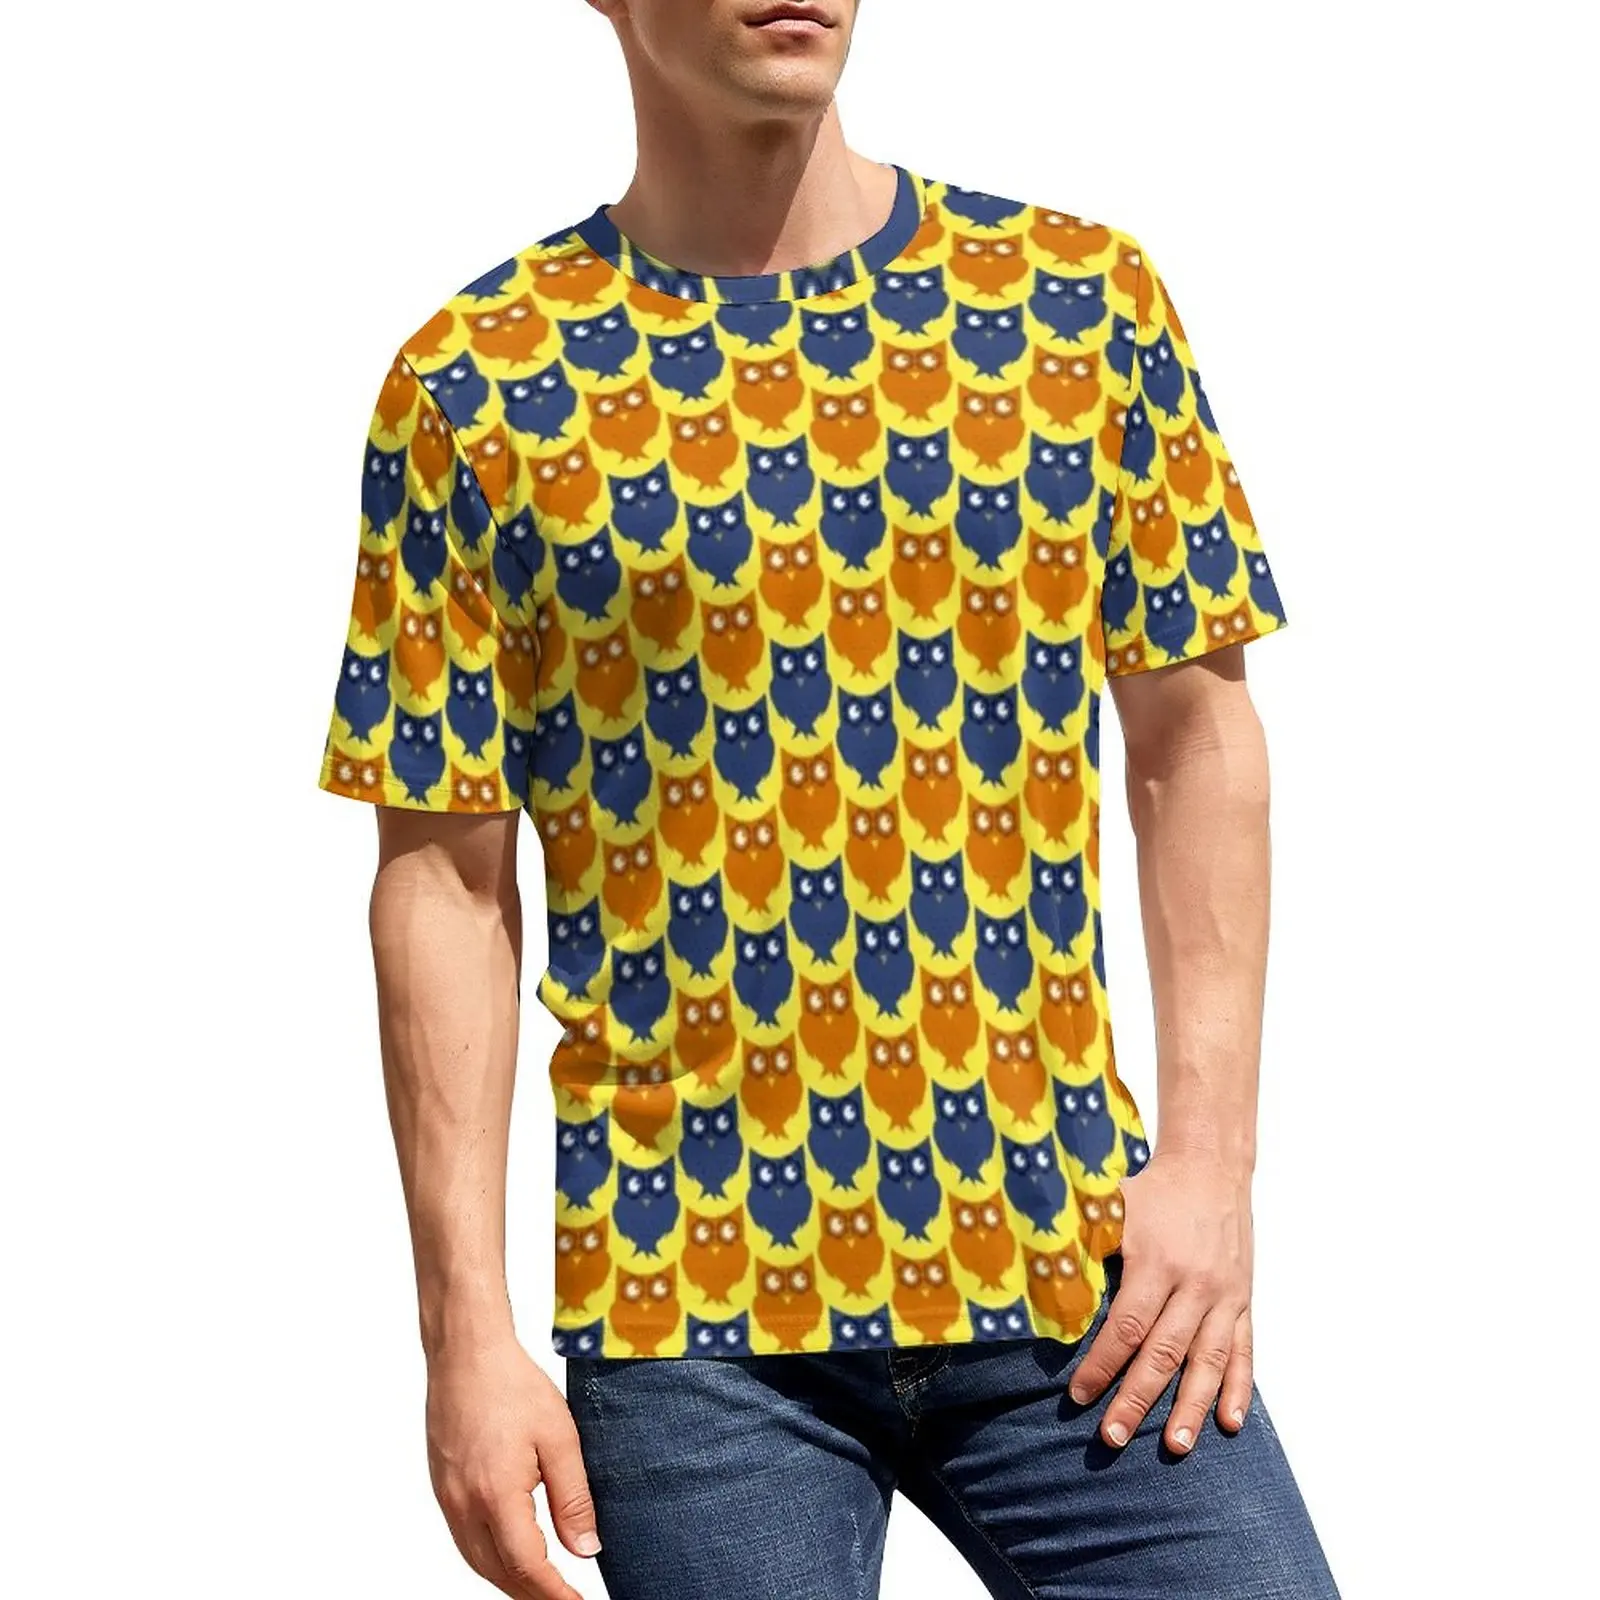 

Owl Design T Shirt Lil Hatchling Print Men Fashion T Shirts Summer Custom Tee Shirt Short-Sleeve Awesome Oversize Tops Gift Idea